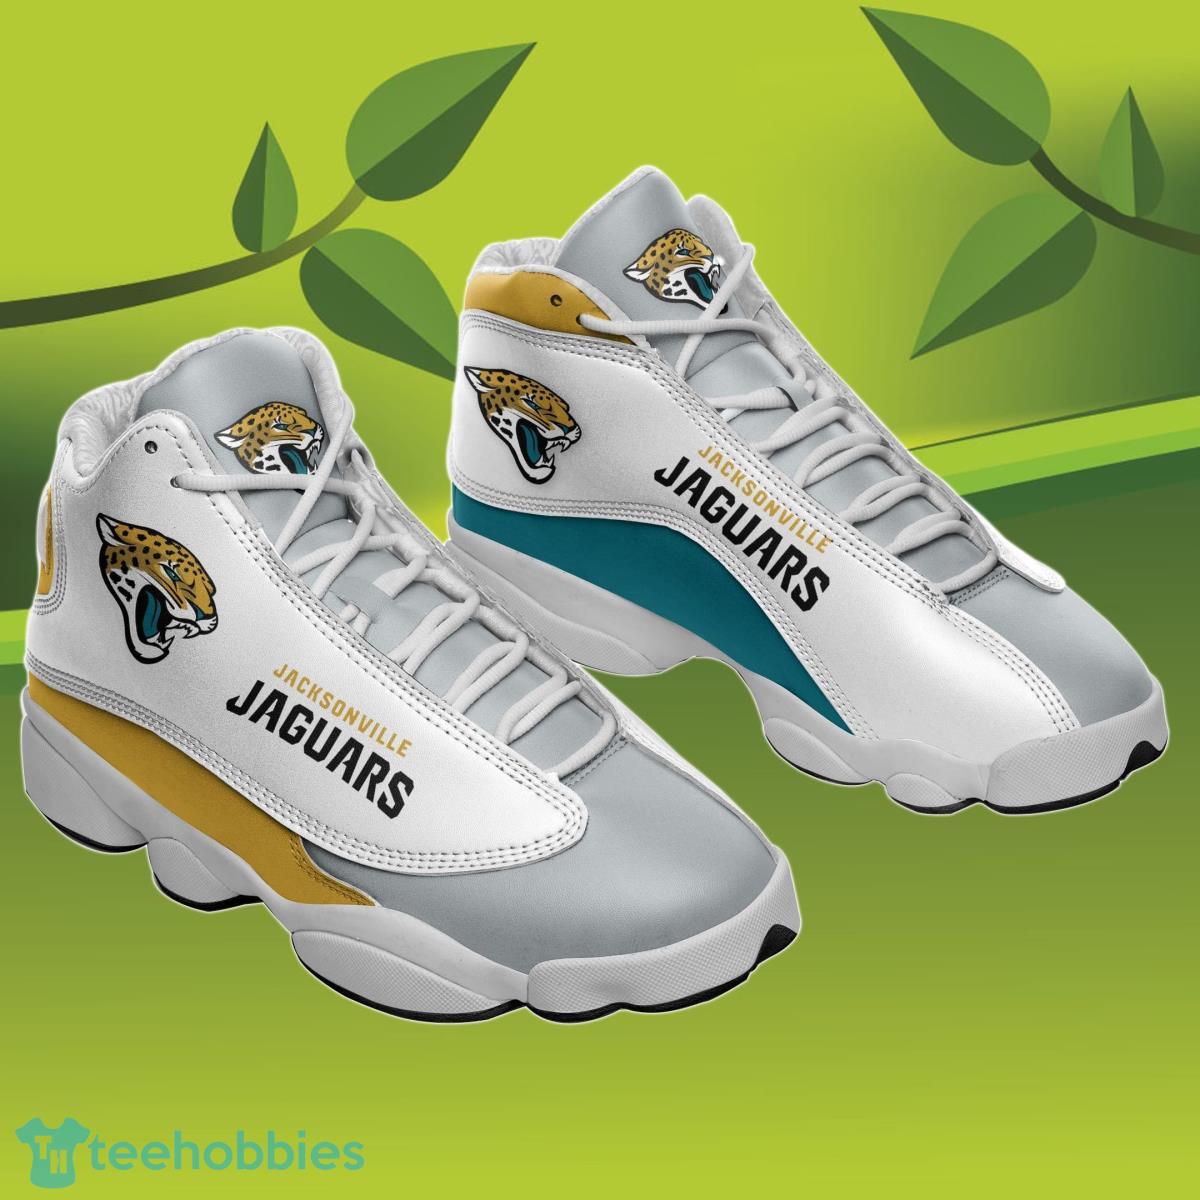 Jacksonville Jaguars Air Jordan 13 Sneakers Best Gift For Friends Product Photo 2